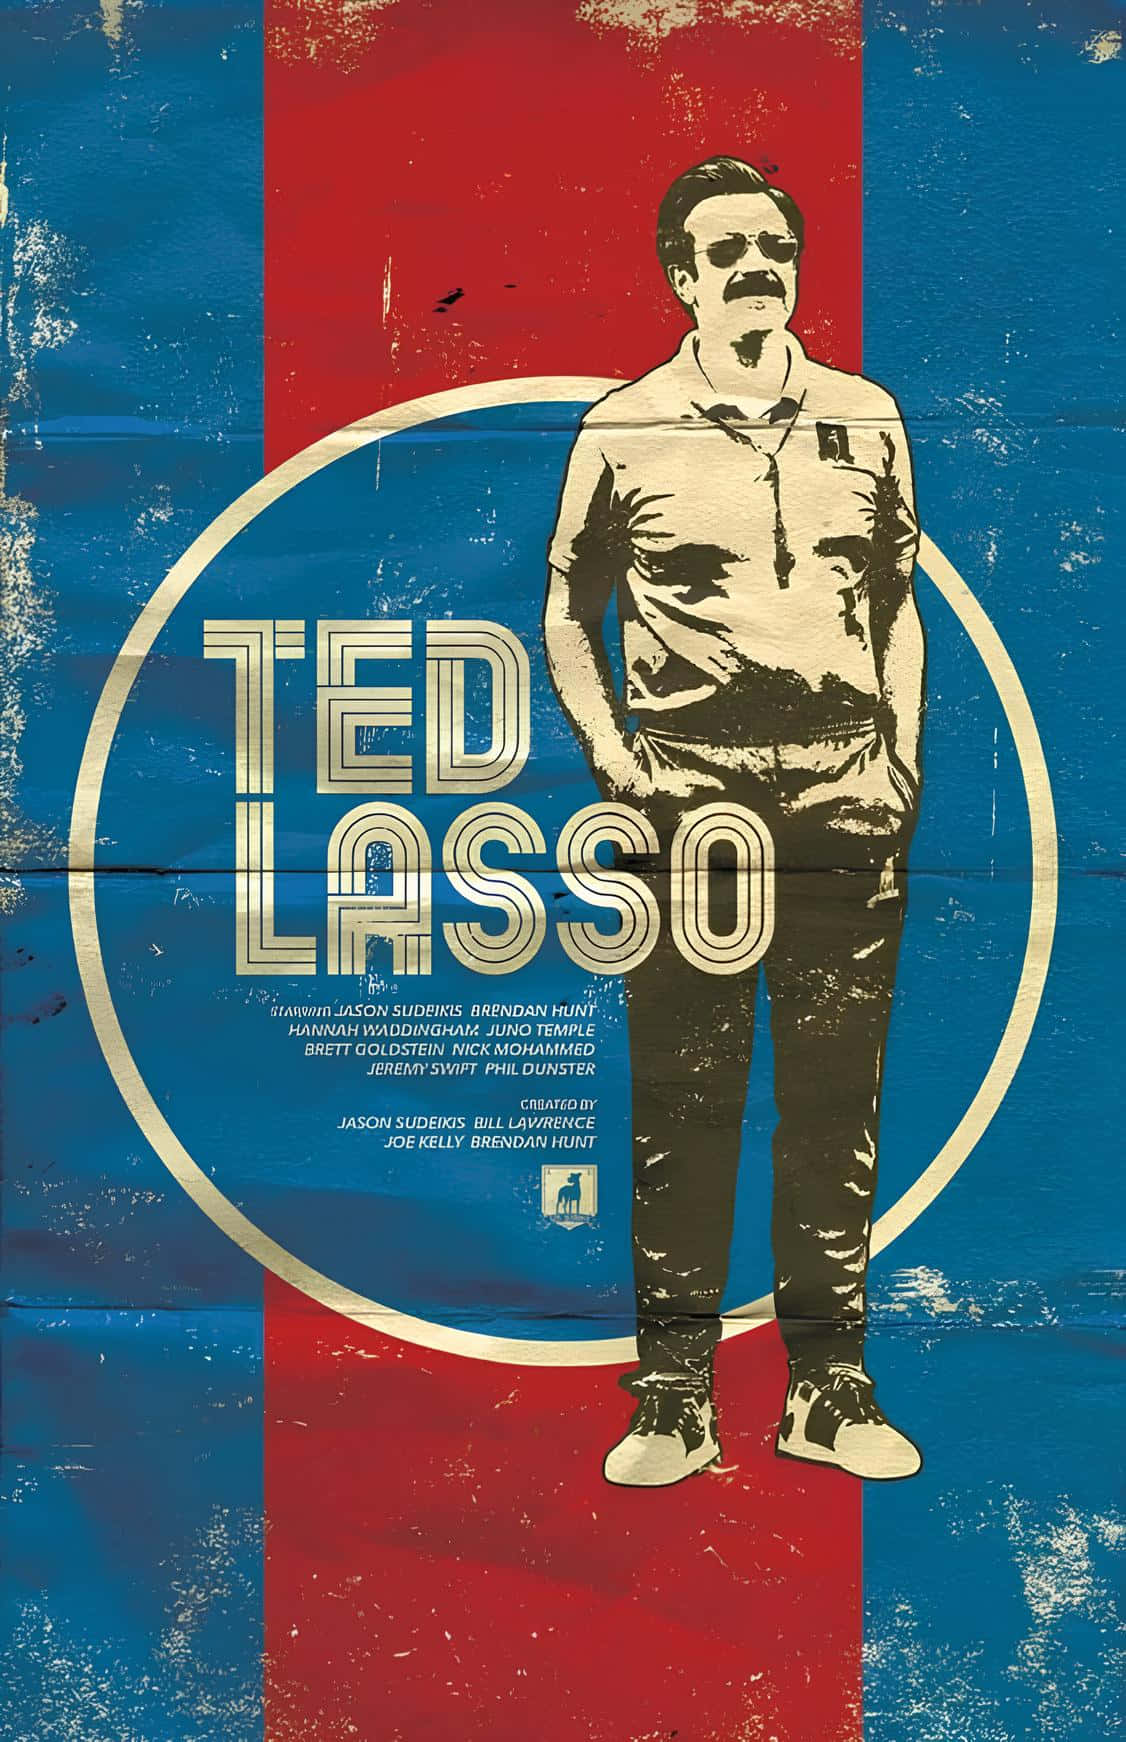 Ted Lasso Vintage Poster Art Wallpaper